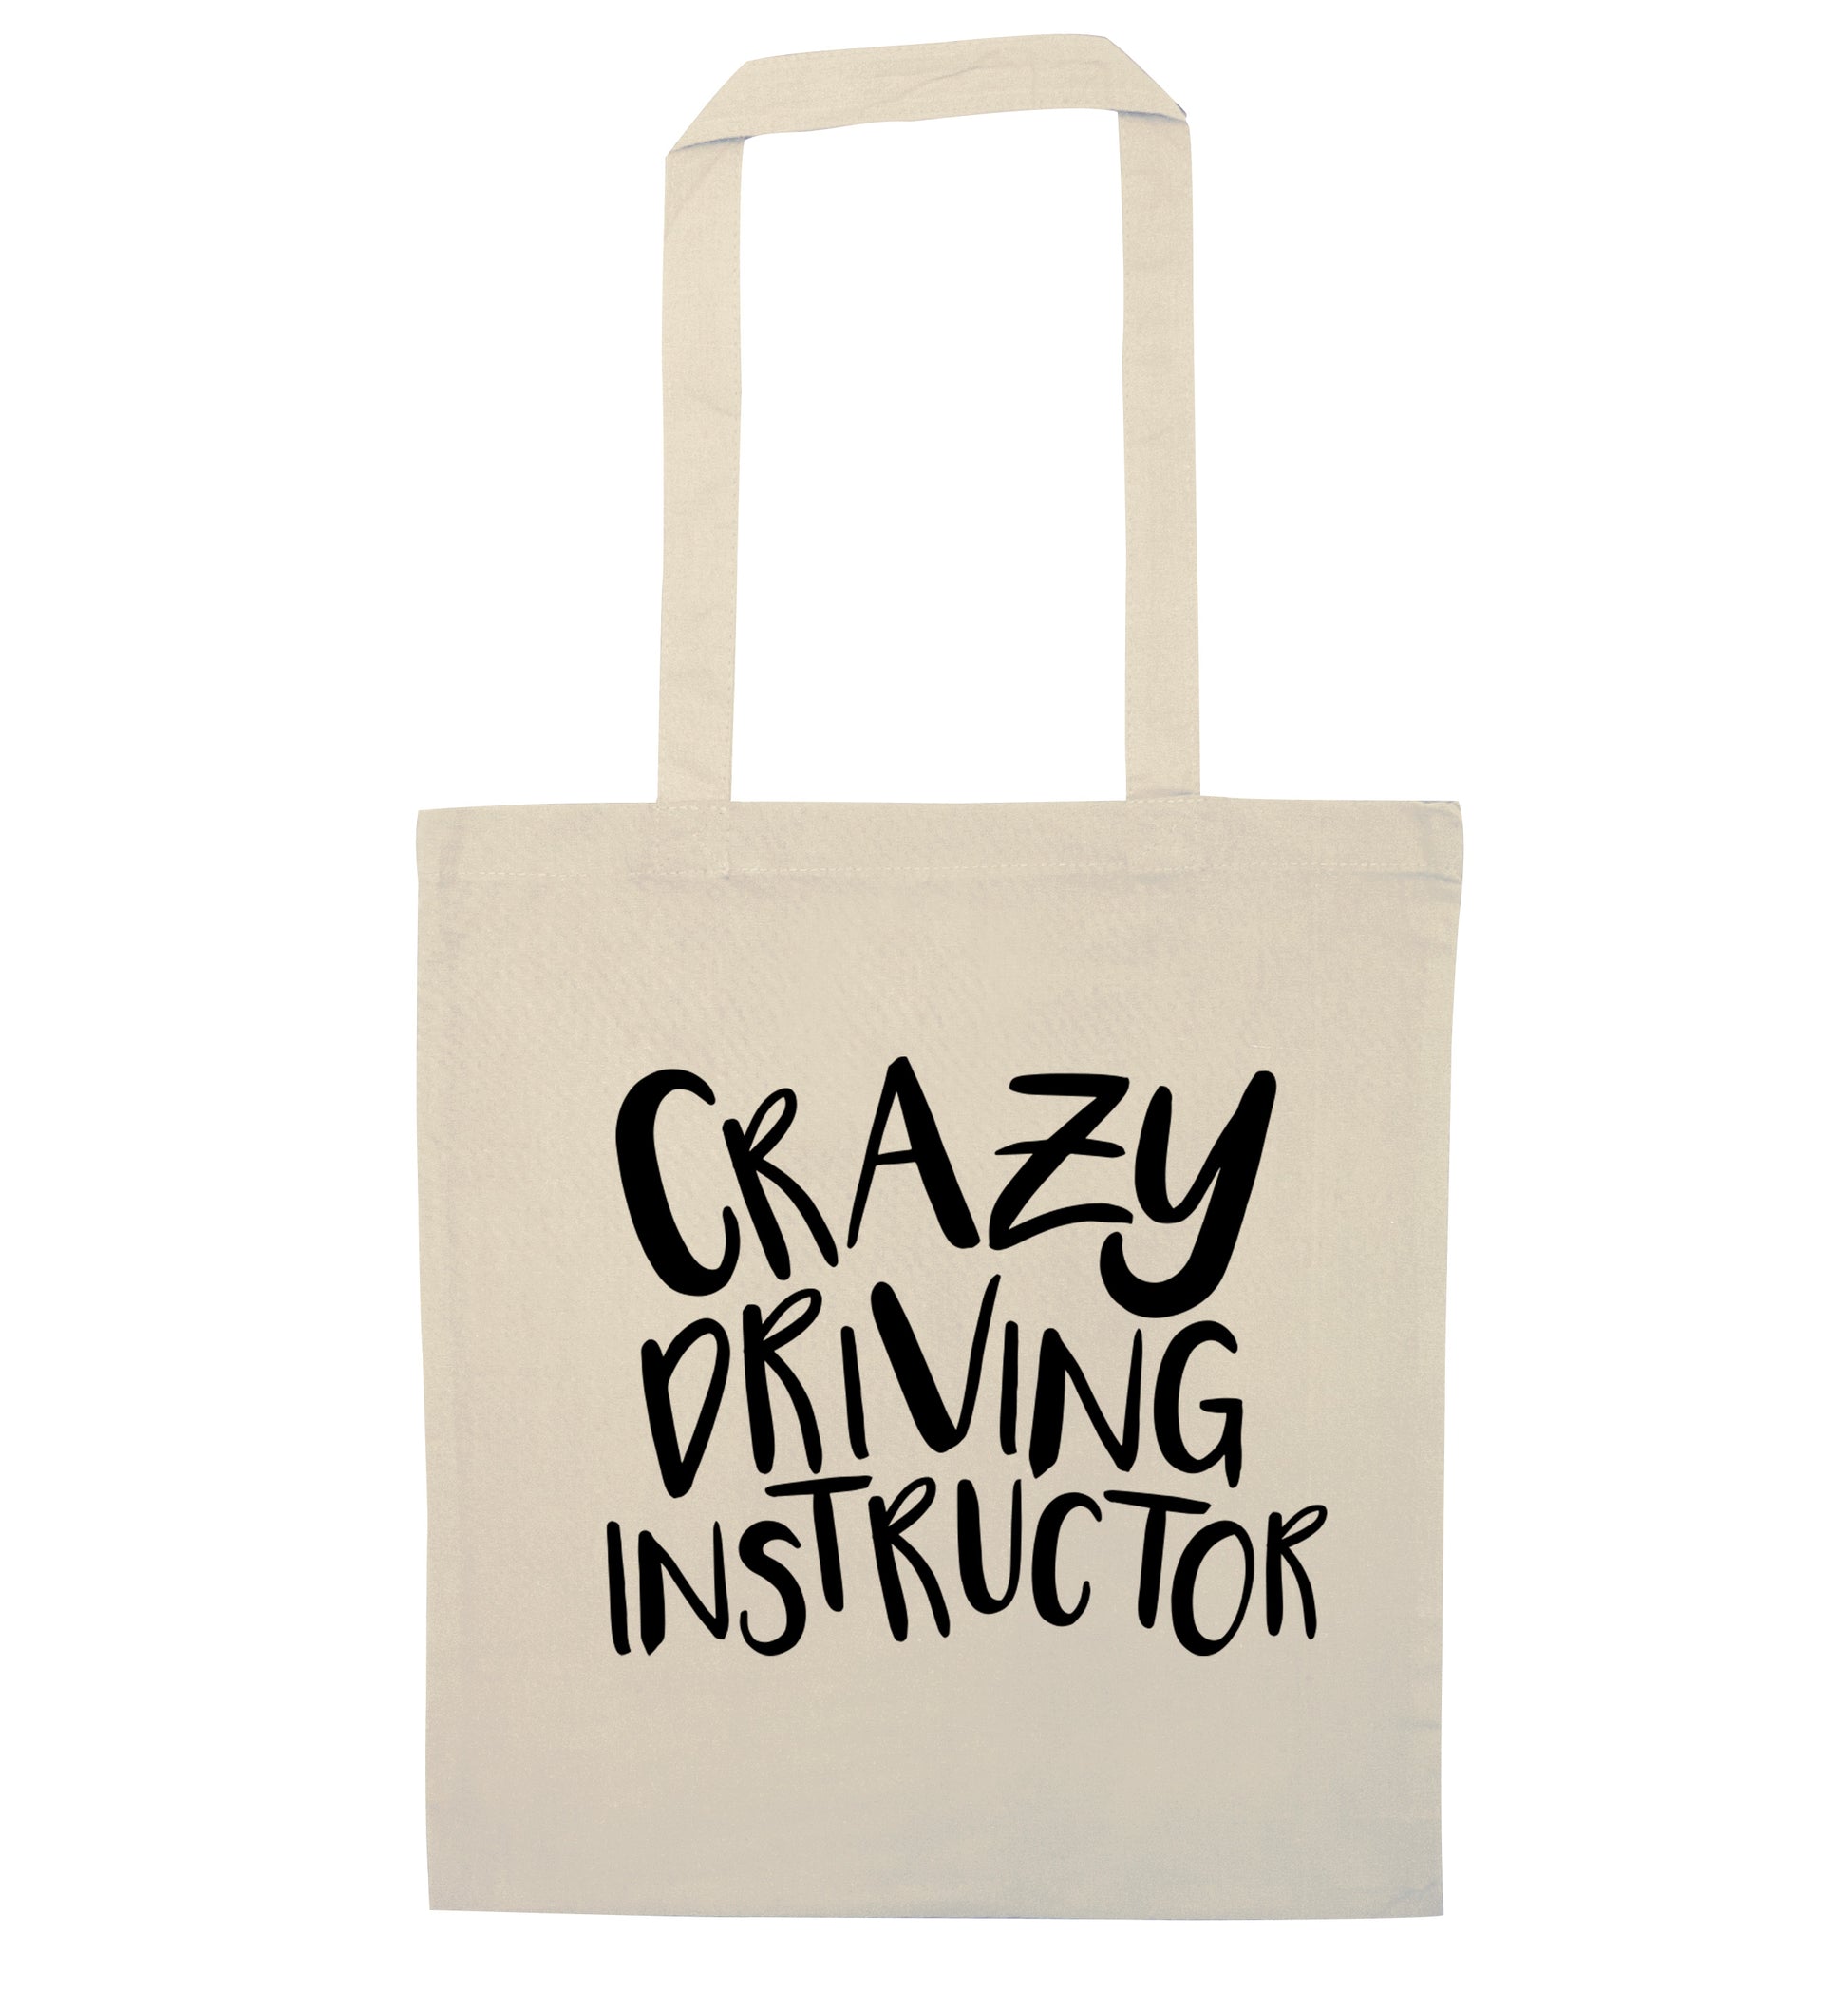 Crazy driving instructor natural tote bag